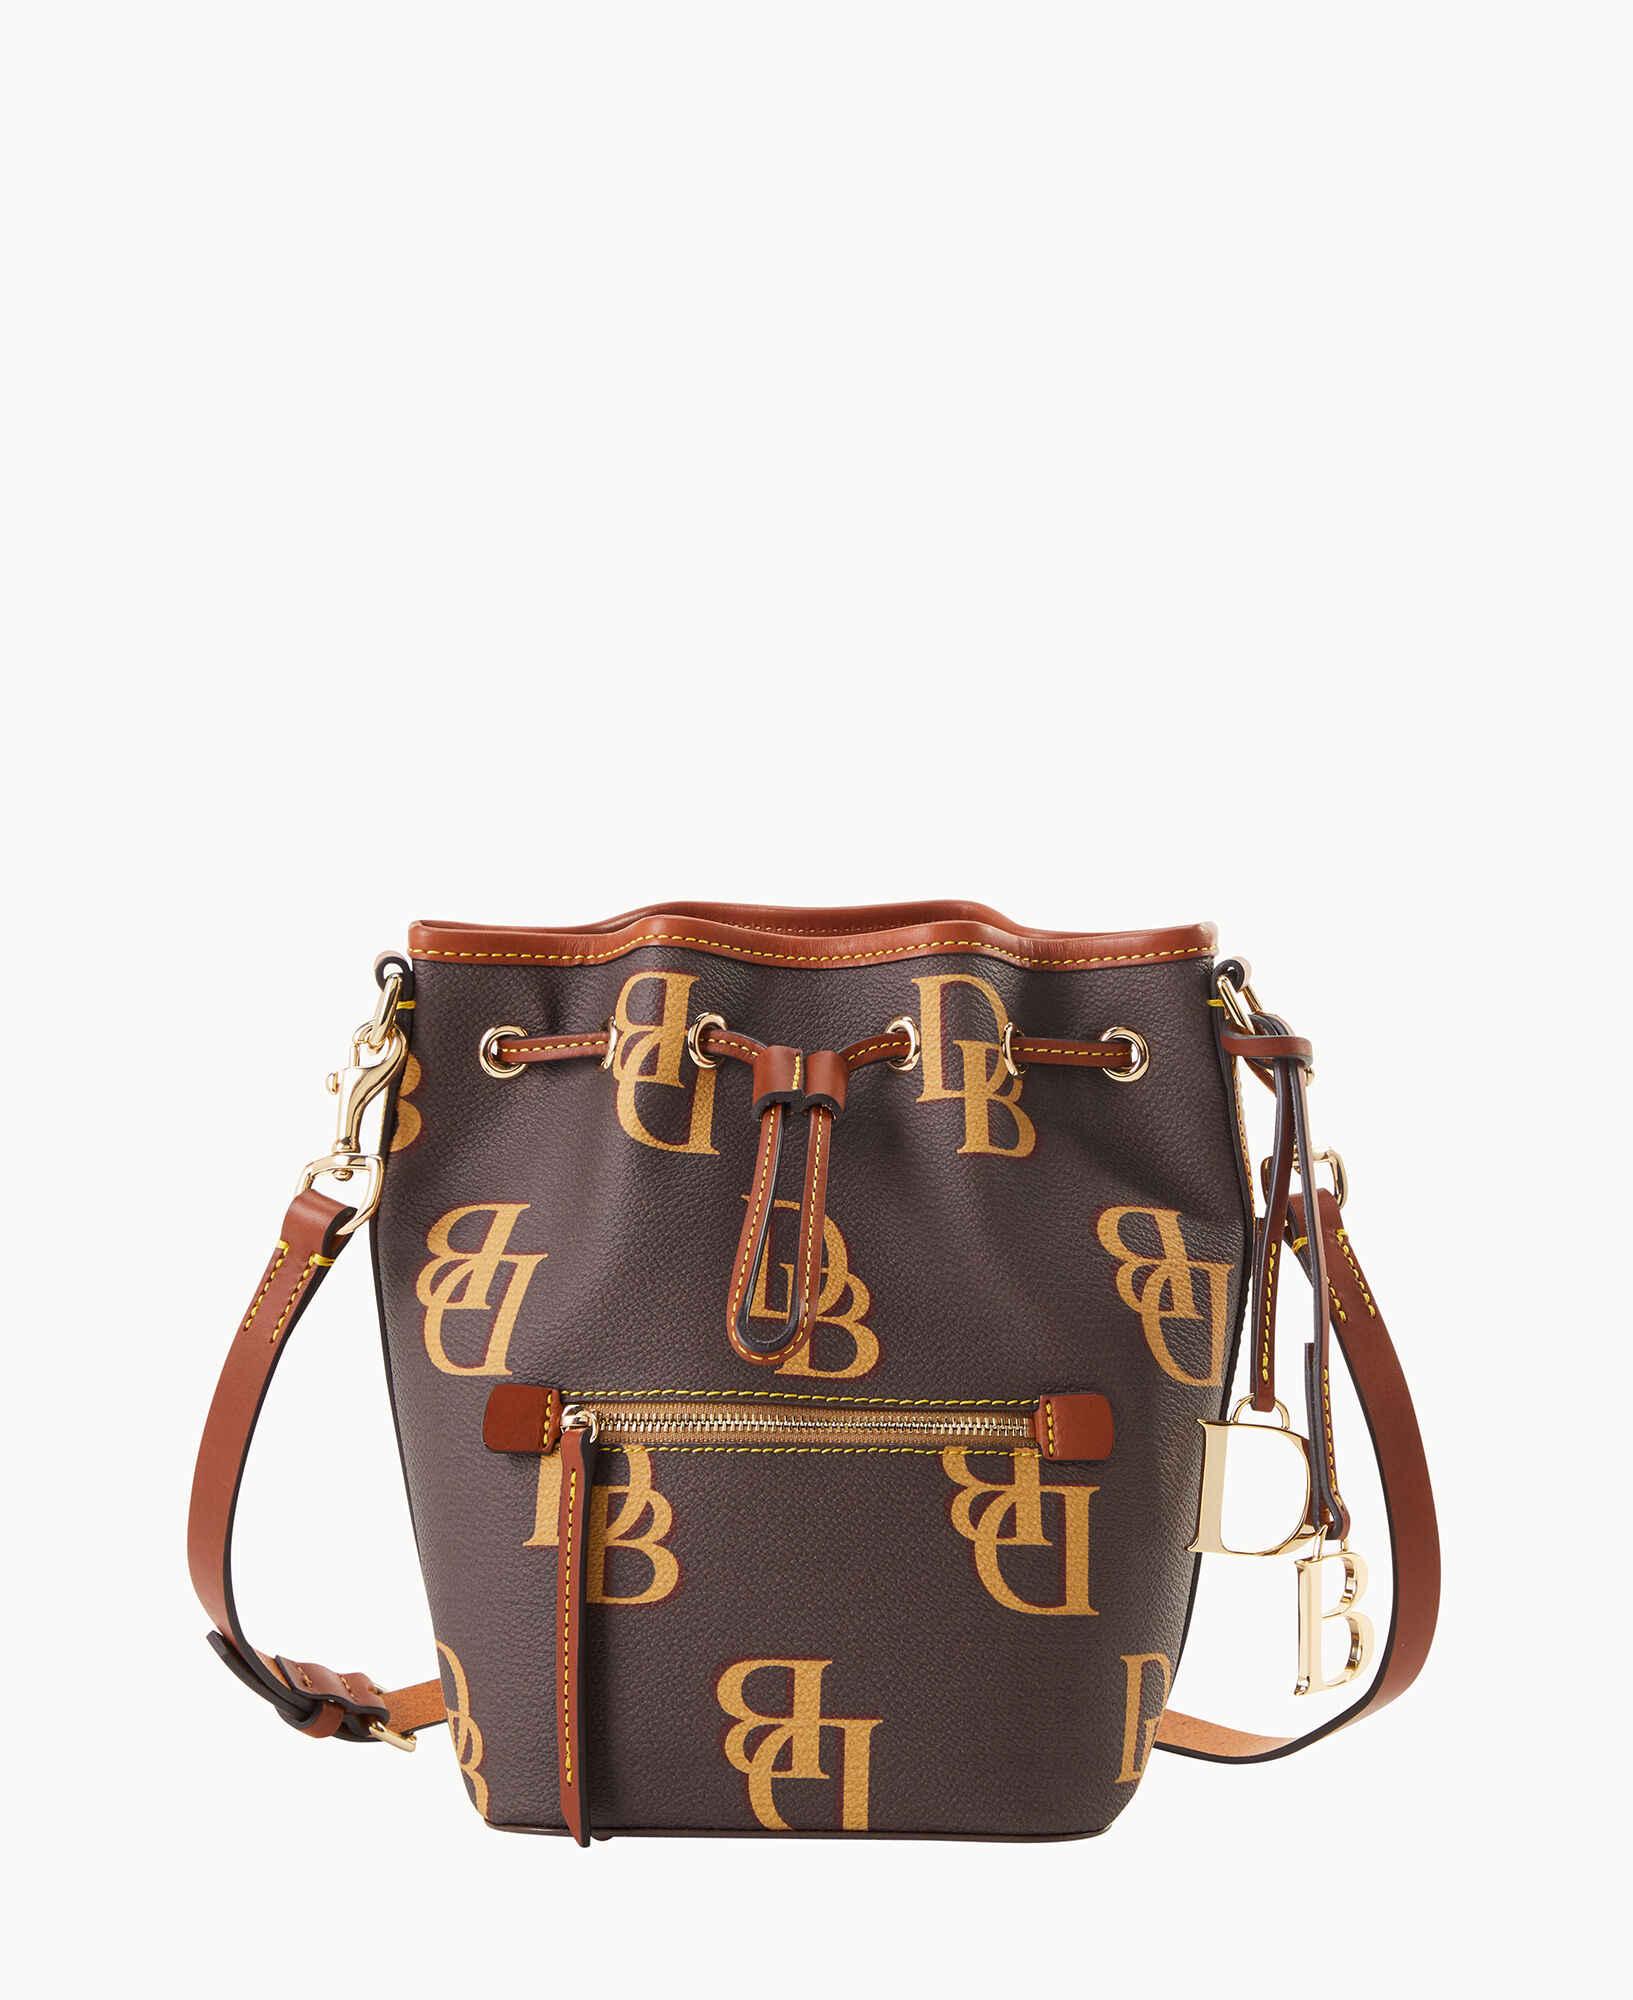 Other, Louis Vuitton Tiny Drawstring Bag